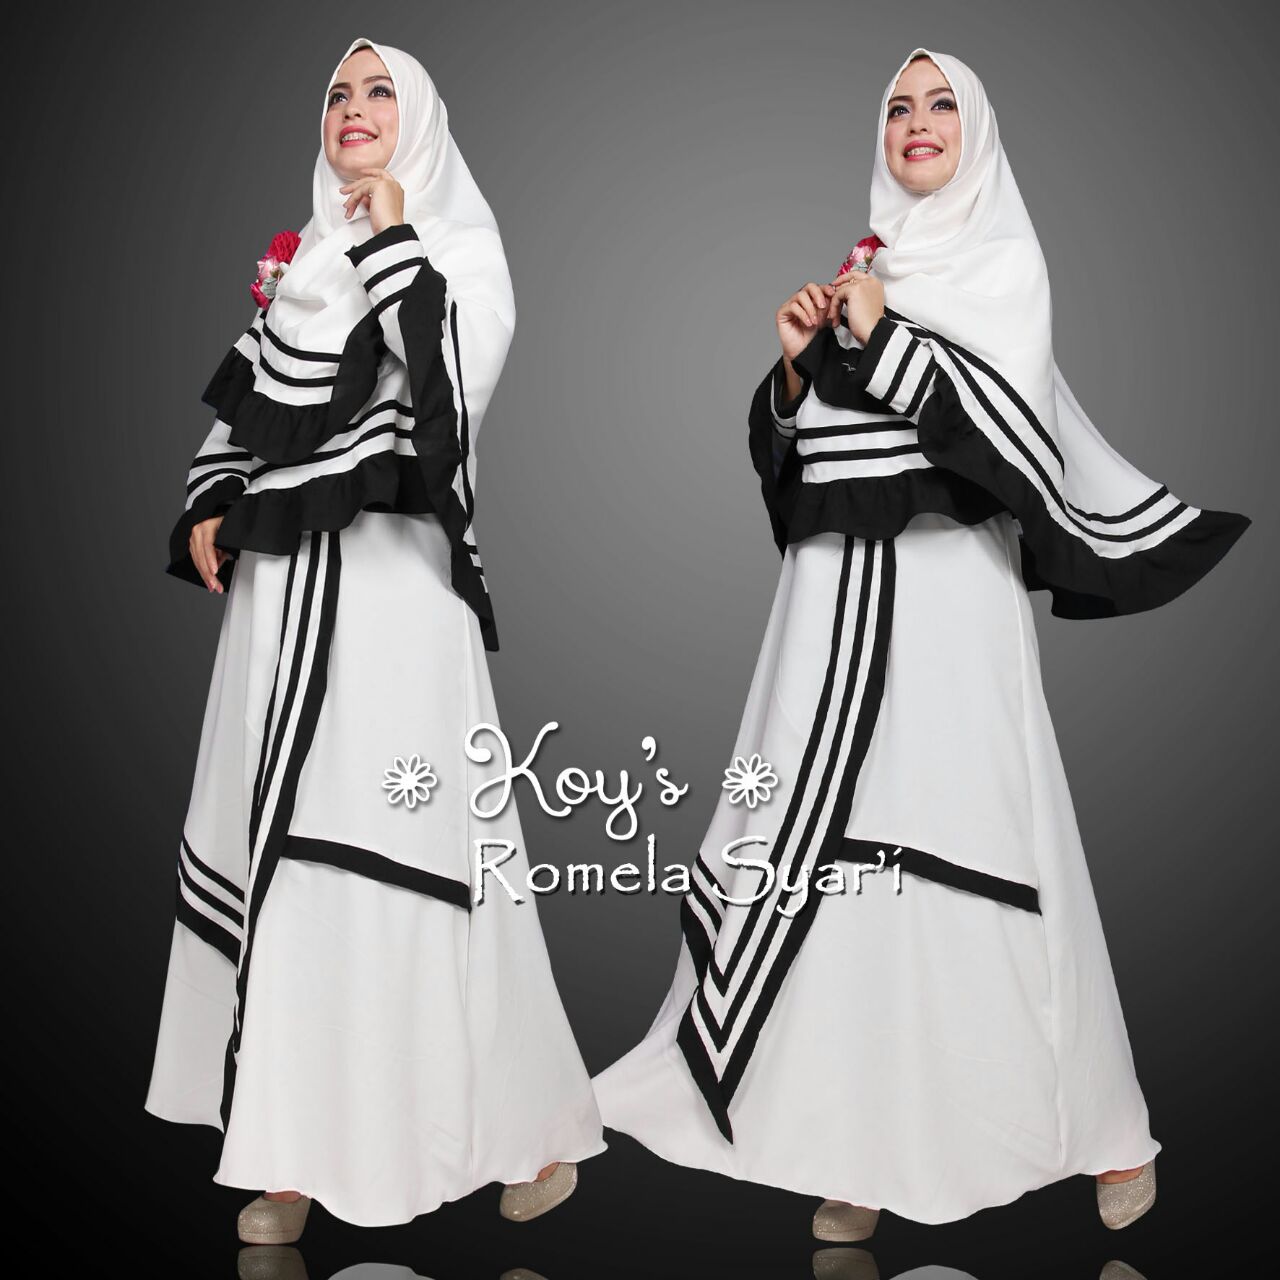  Jual  Baju  Hijab  Elegant Romela Syar  By Koy s